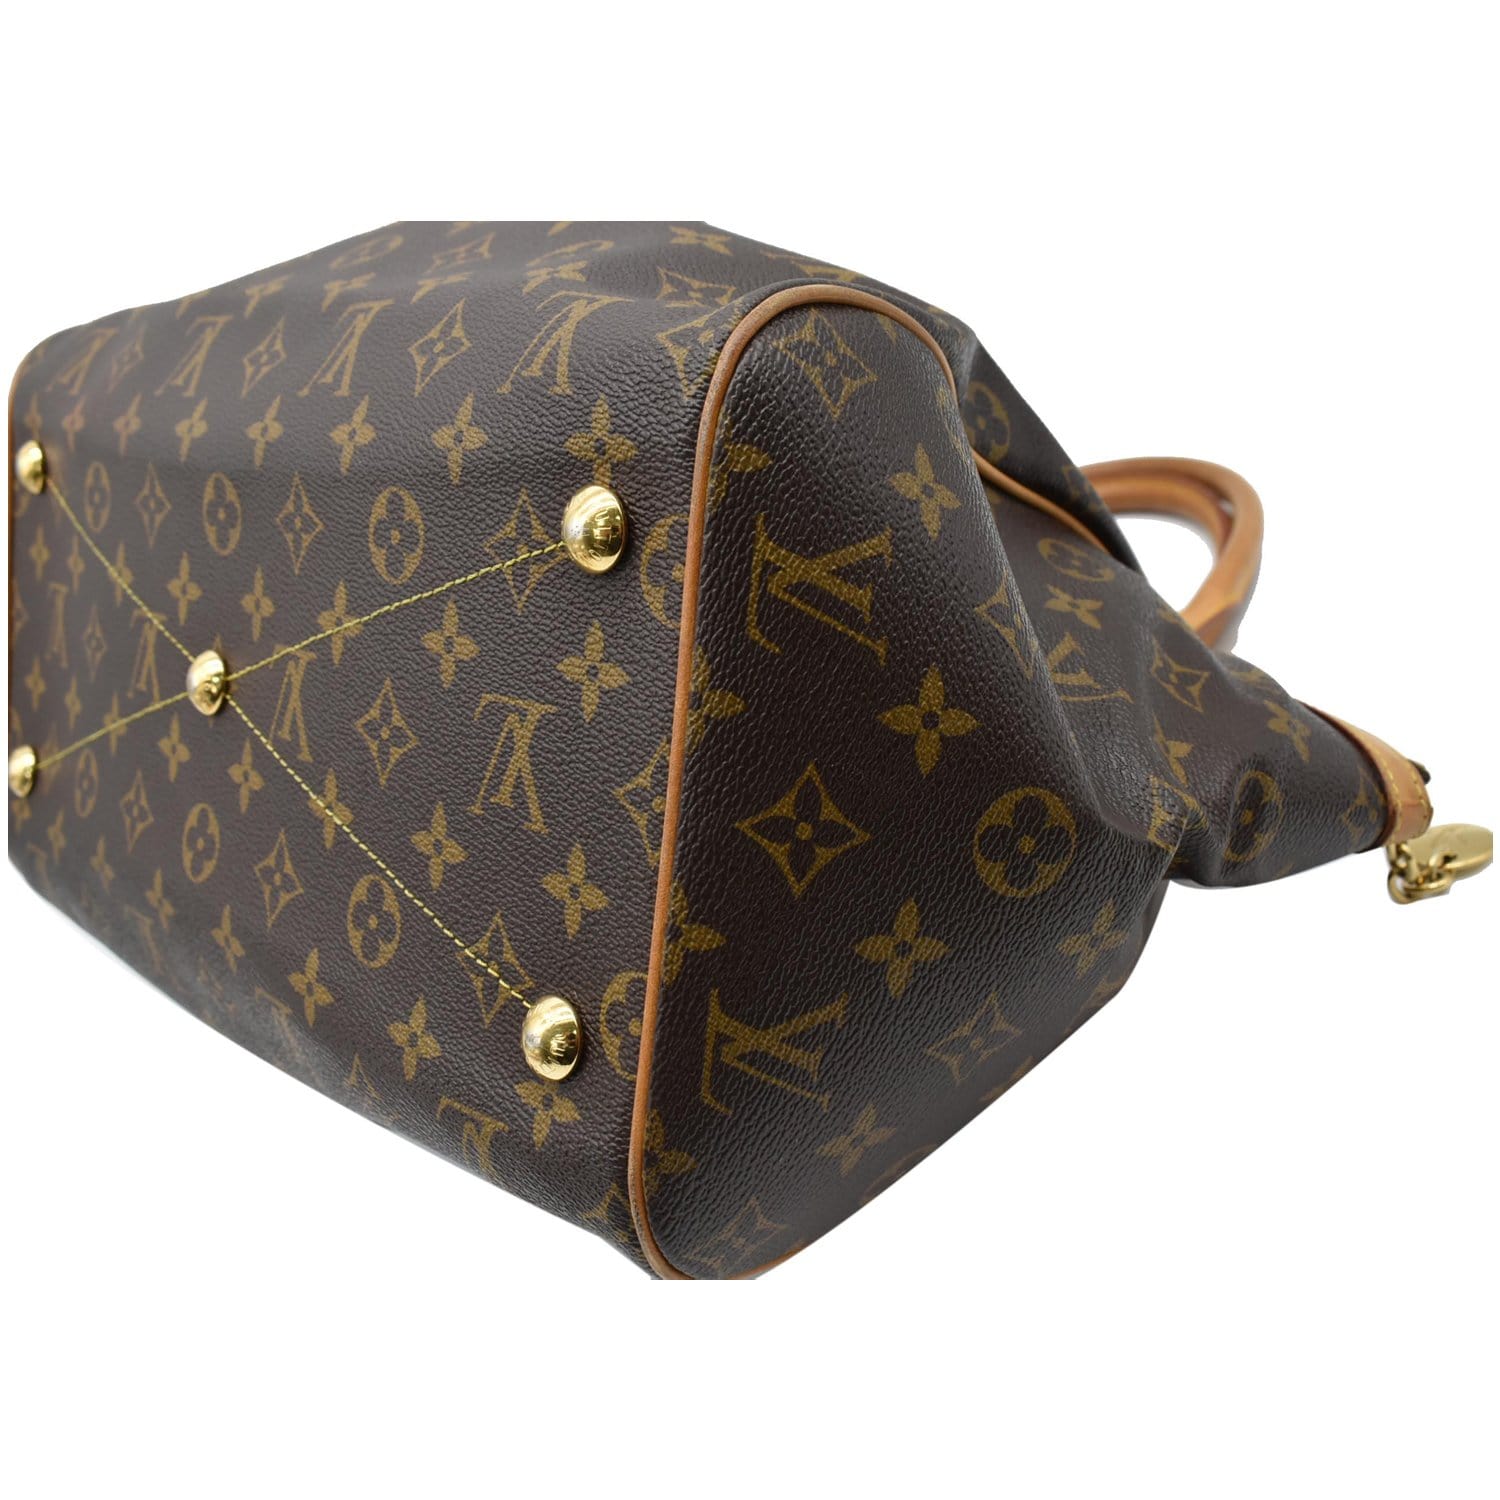 🌸Louis Vuitton Tivoli GM Monogram Satchel Shoulder Tote Bag